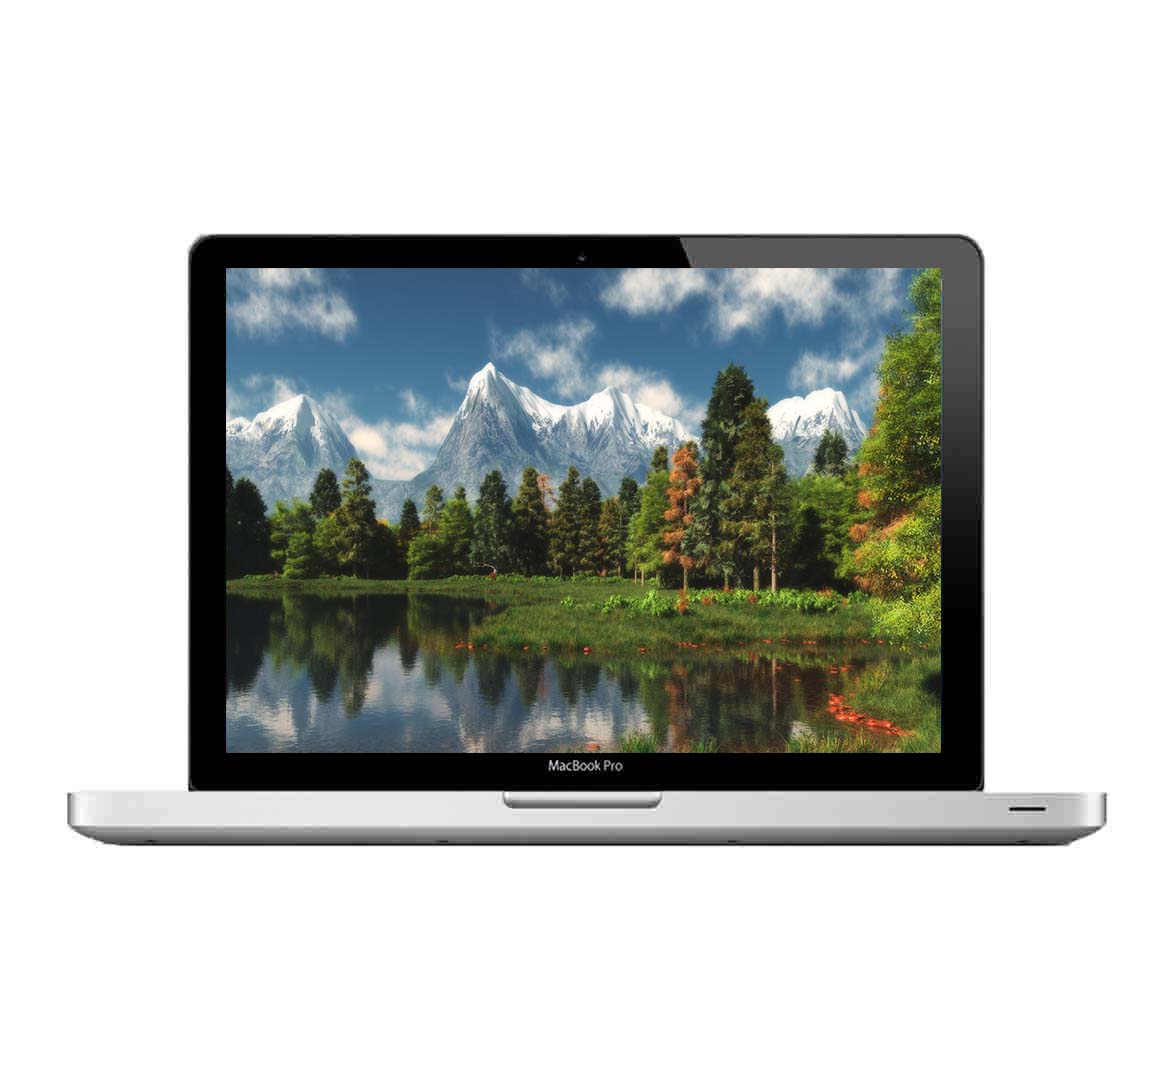 Apple MacBook A1342 Business Laptop, Intel Core 2 DUO CPU, 4GB RAM, 500GB HDD , 13.3 Inch Display, Refurbished Laptop